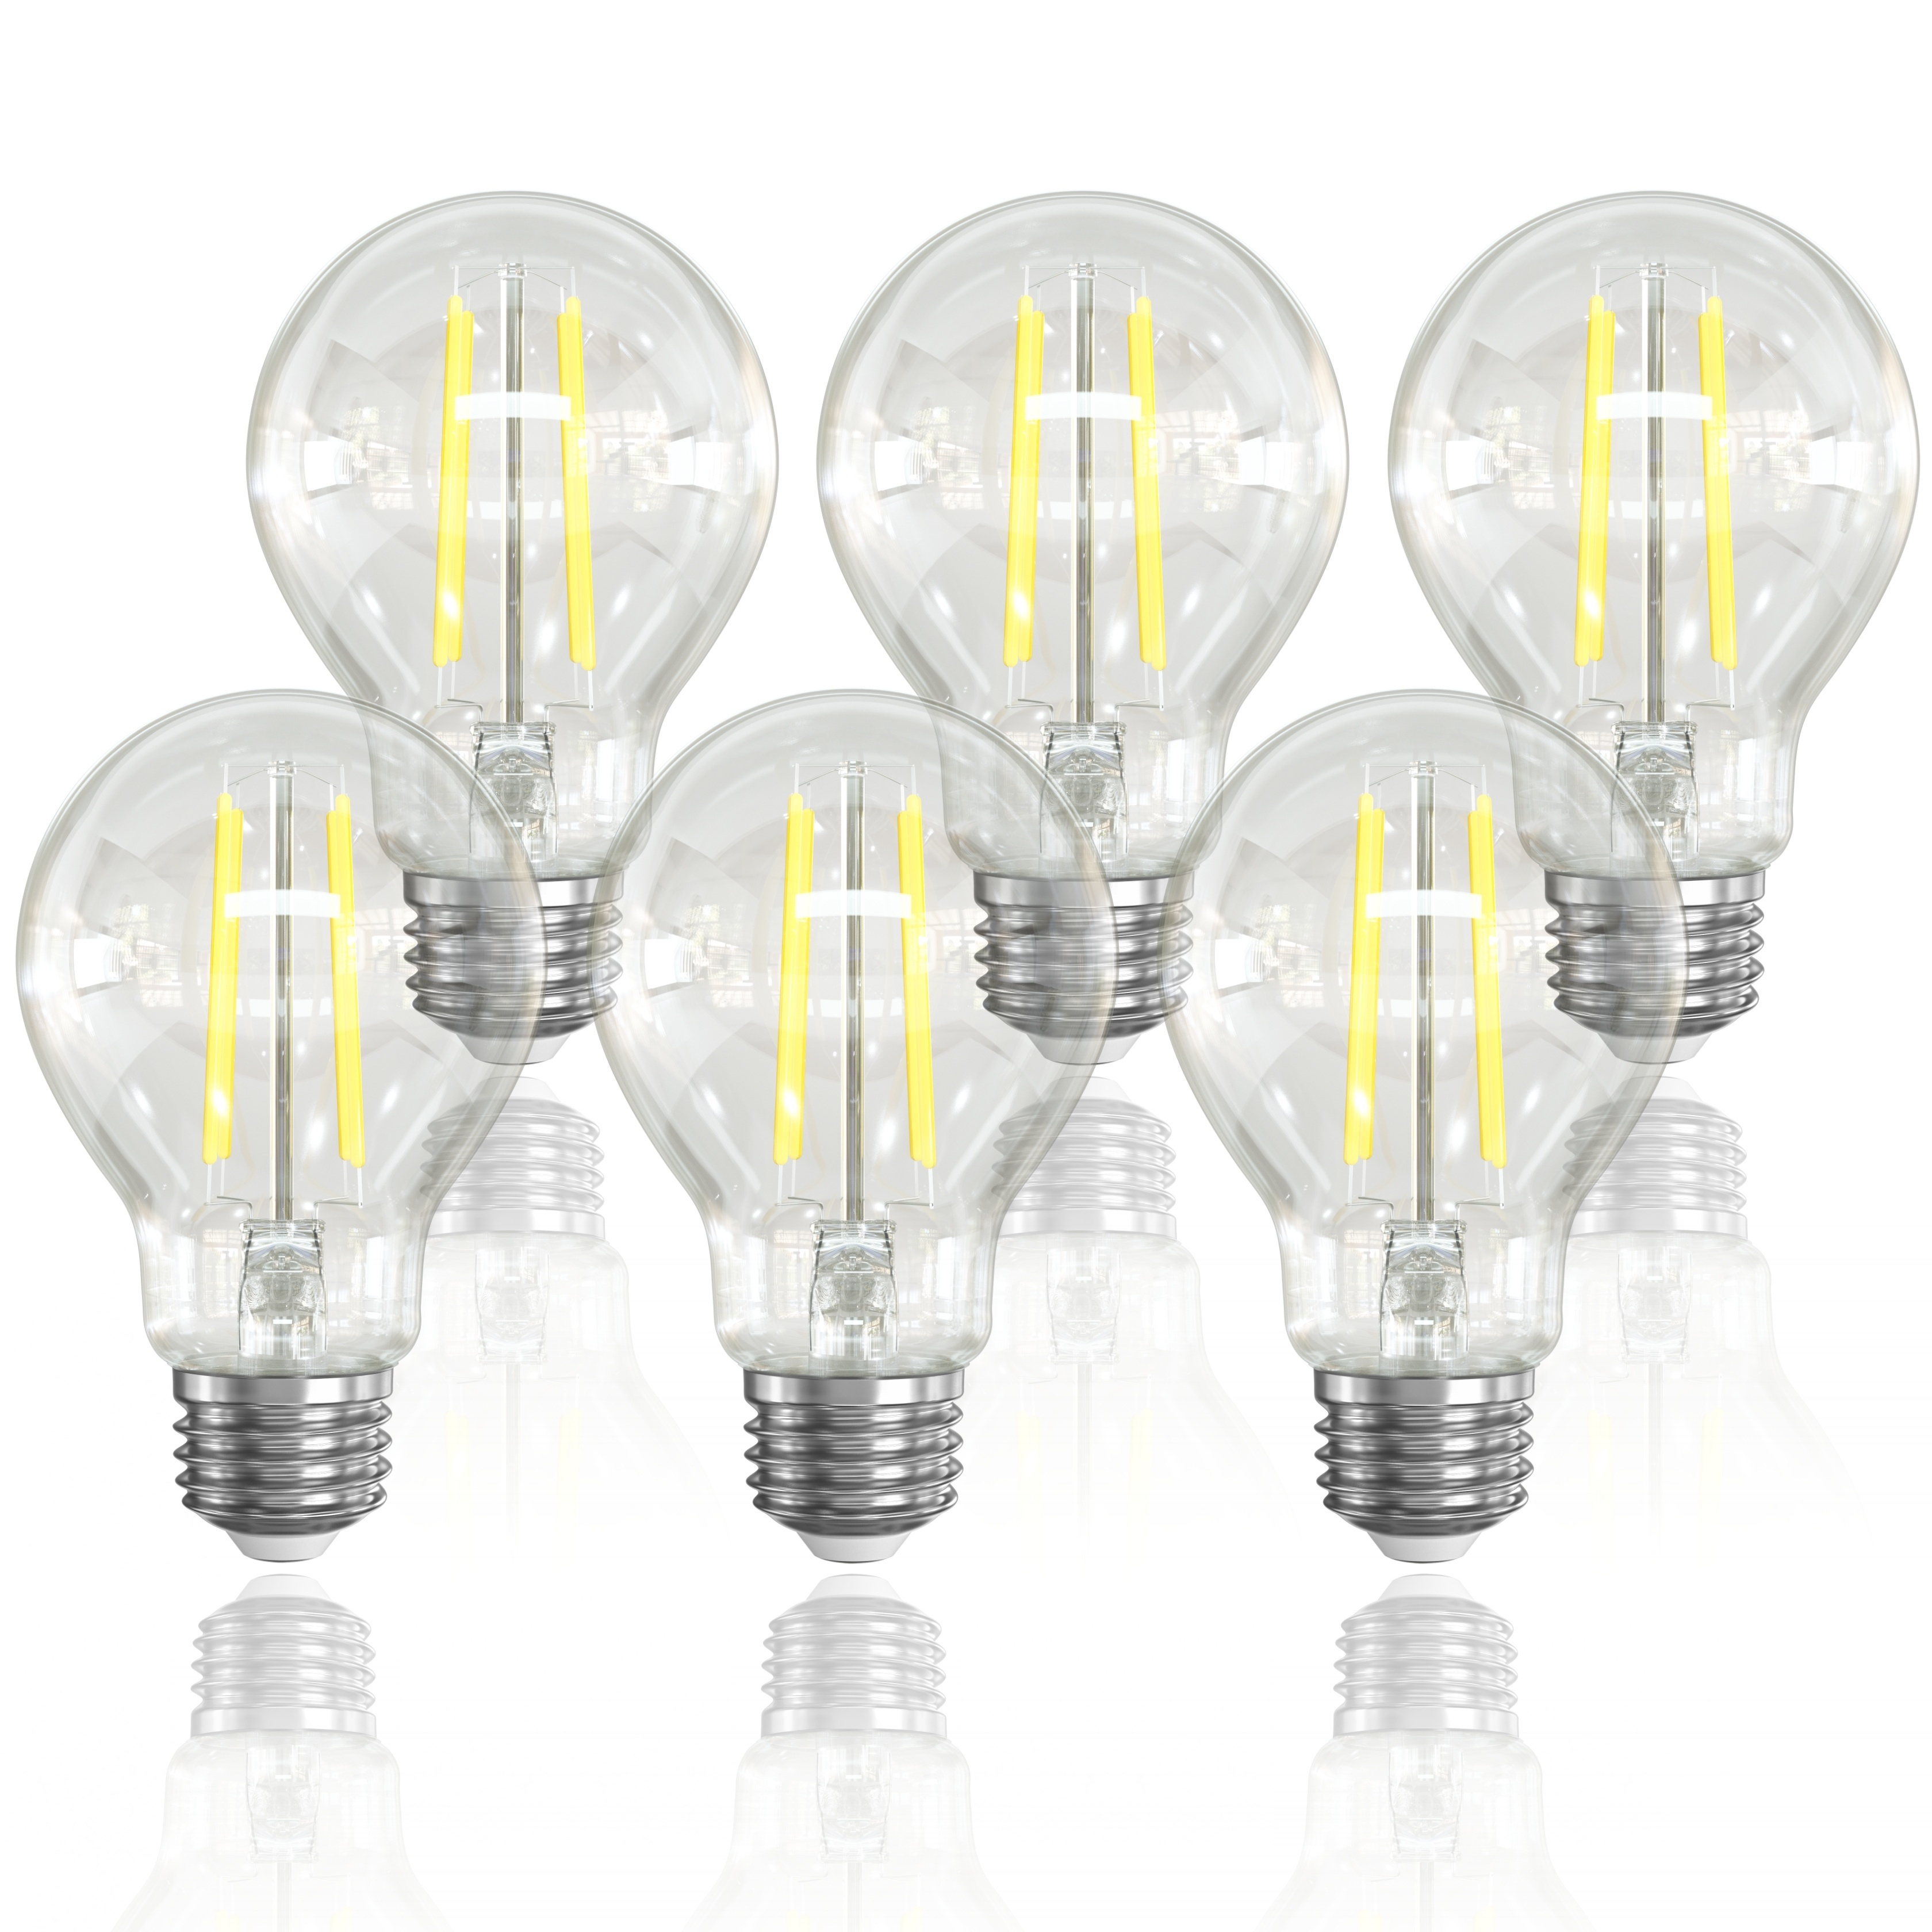 Bombilla LED T10, bombillas tubulares LED regulables de 8 W, equivalente a  bombilla incandescente de 75 a 100 W, blanco suave de 3000 K, vidrio